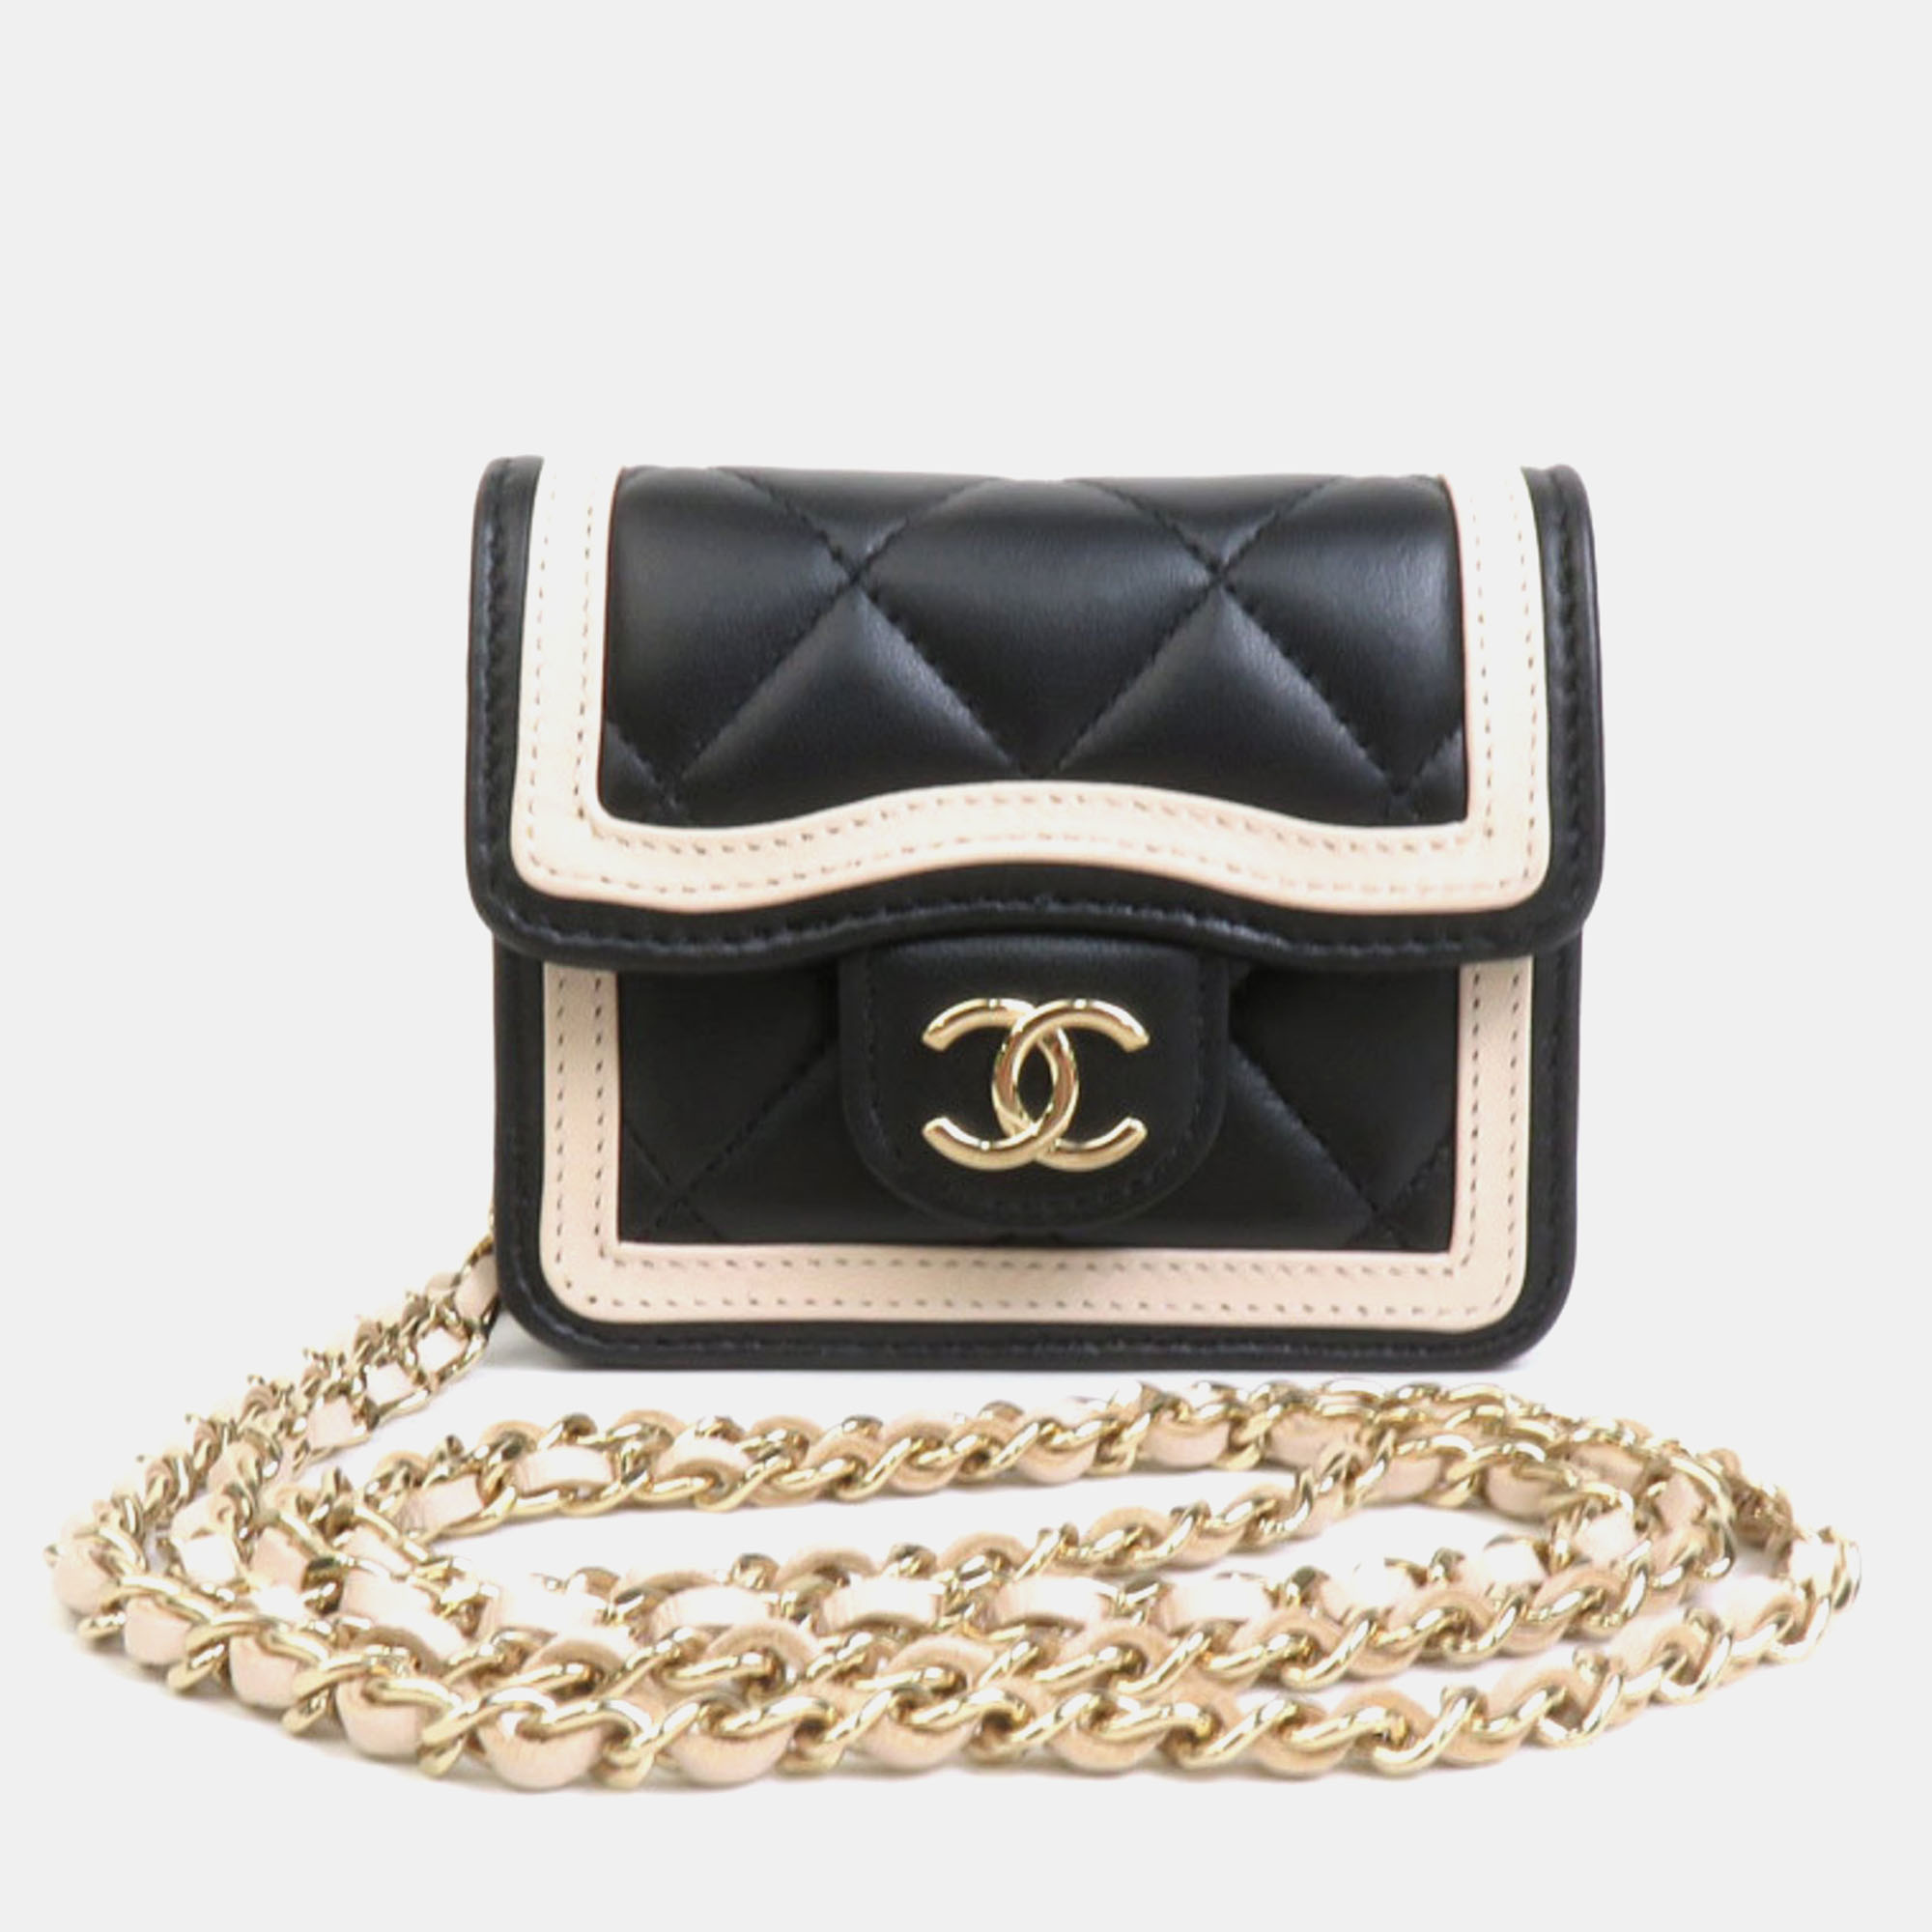 Chanel black/light beige leather graphic flap bag